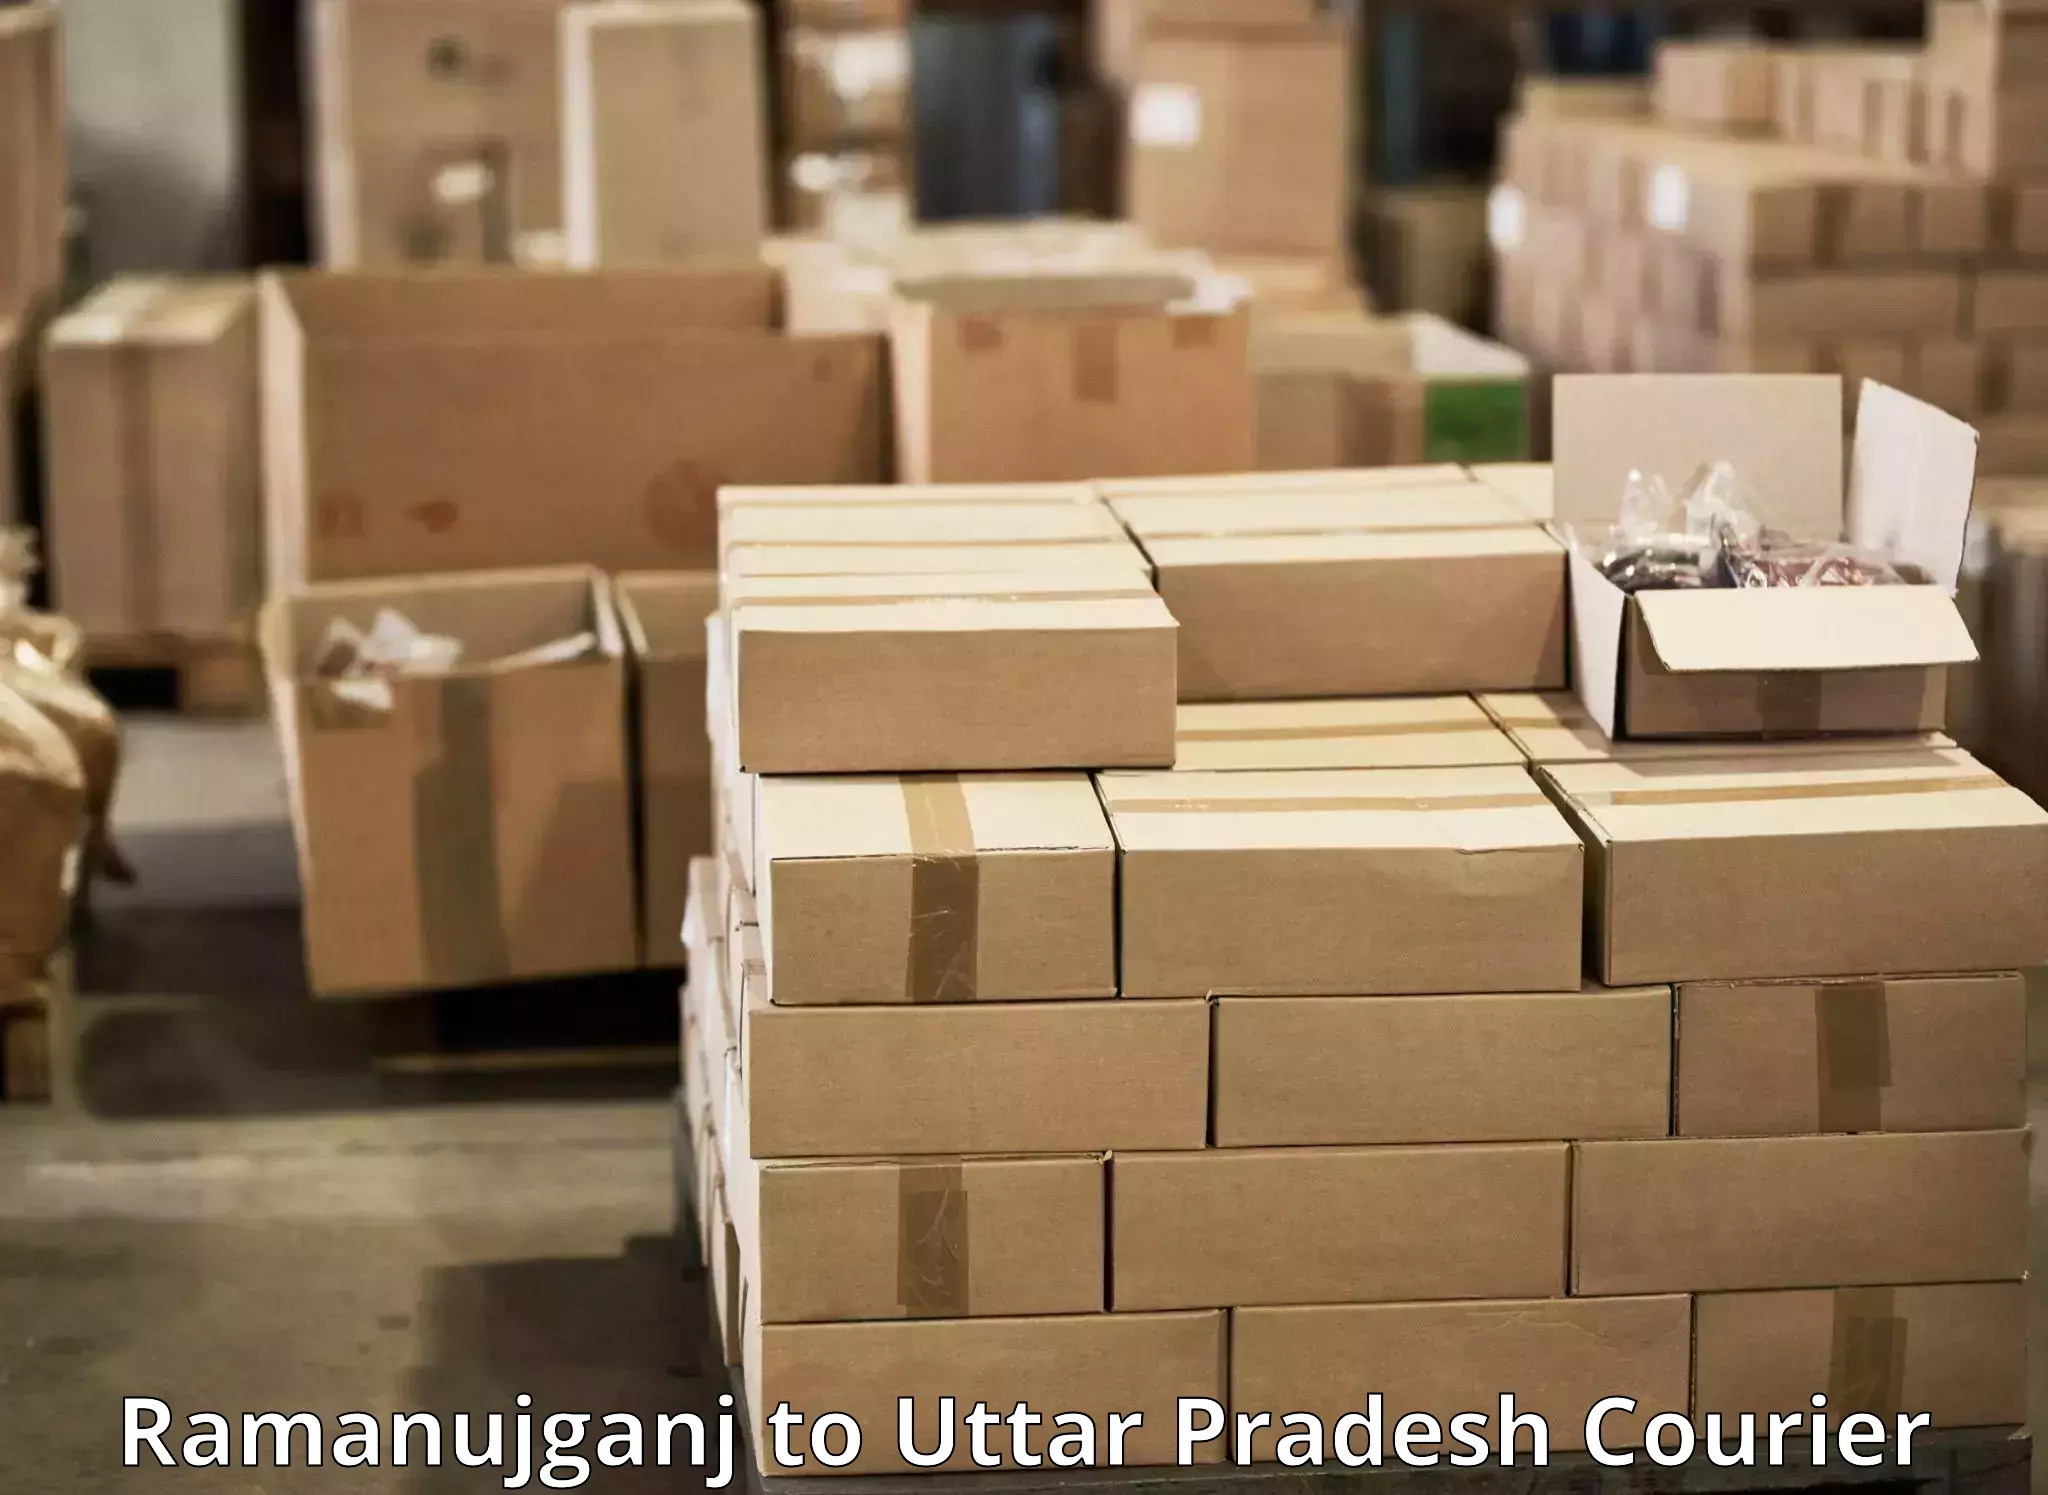 Supply chain efficiency Ramanujganj to Dariyabad